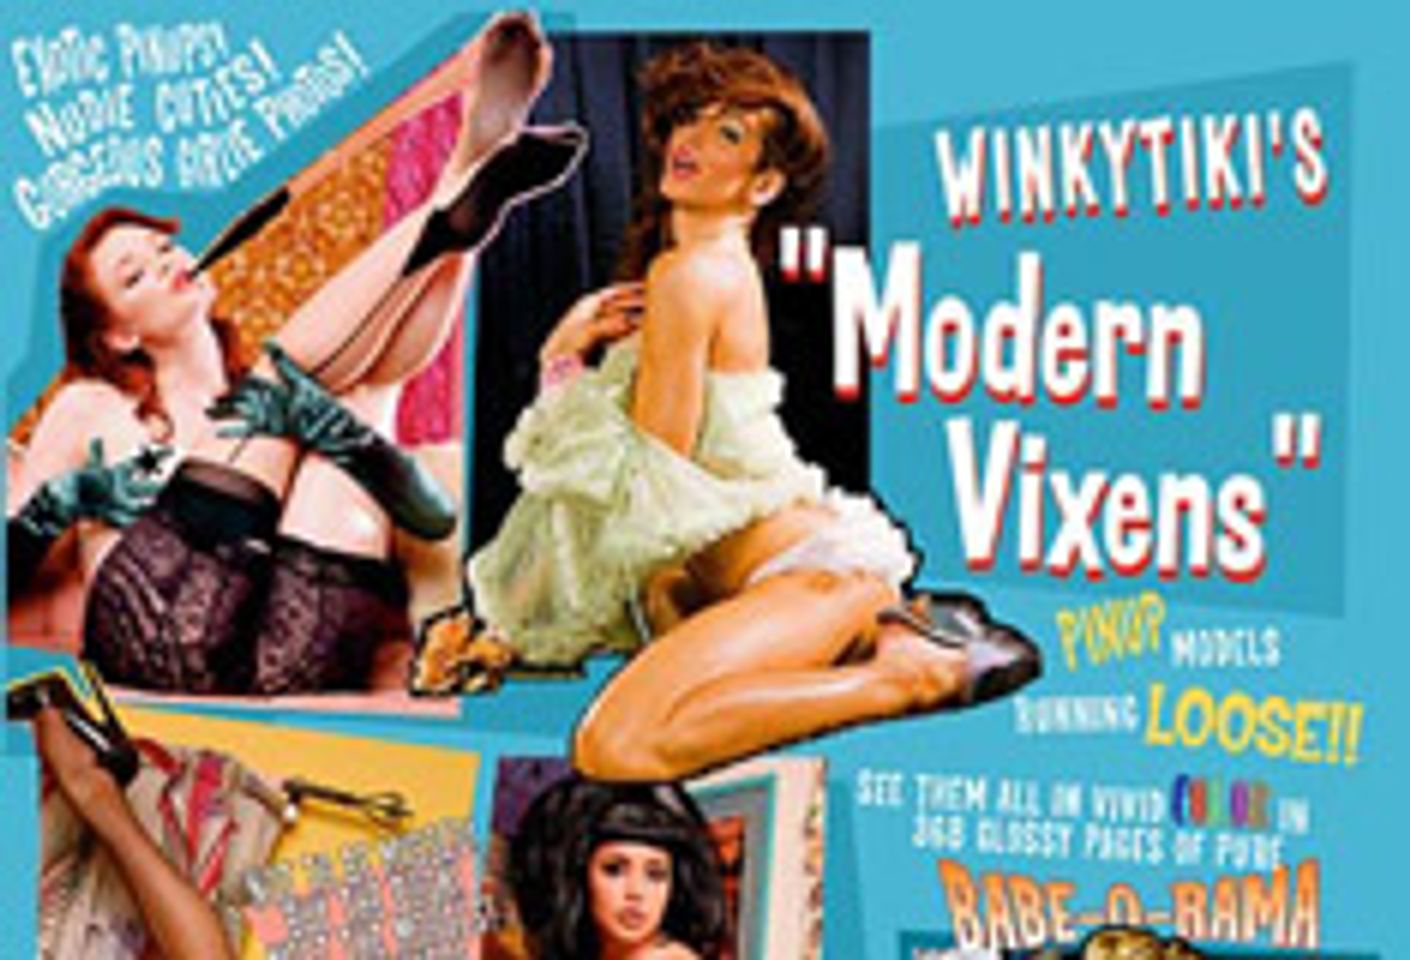 Winky Tiki's <i>Modern Vixens</i> to Debut